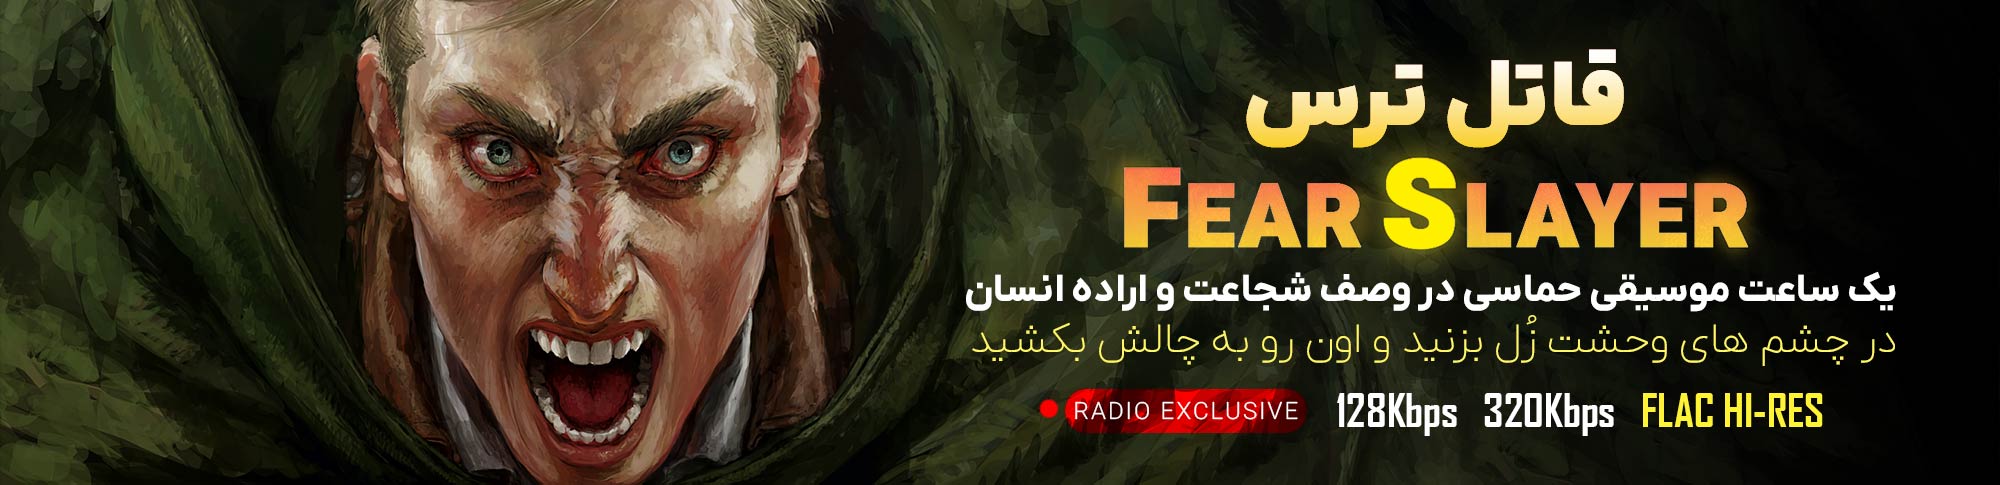 Fear Slayer - Radio Exclusive